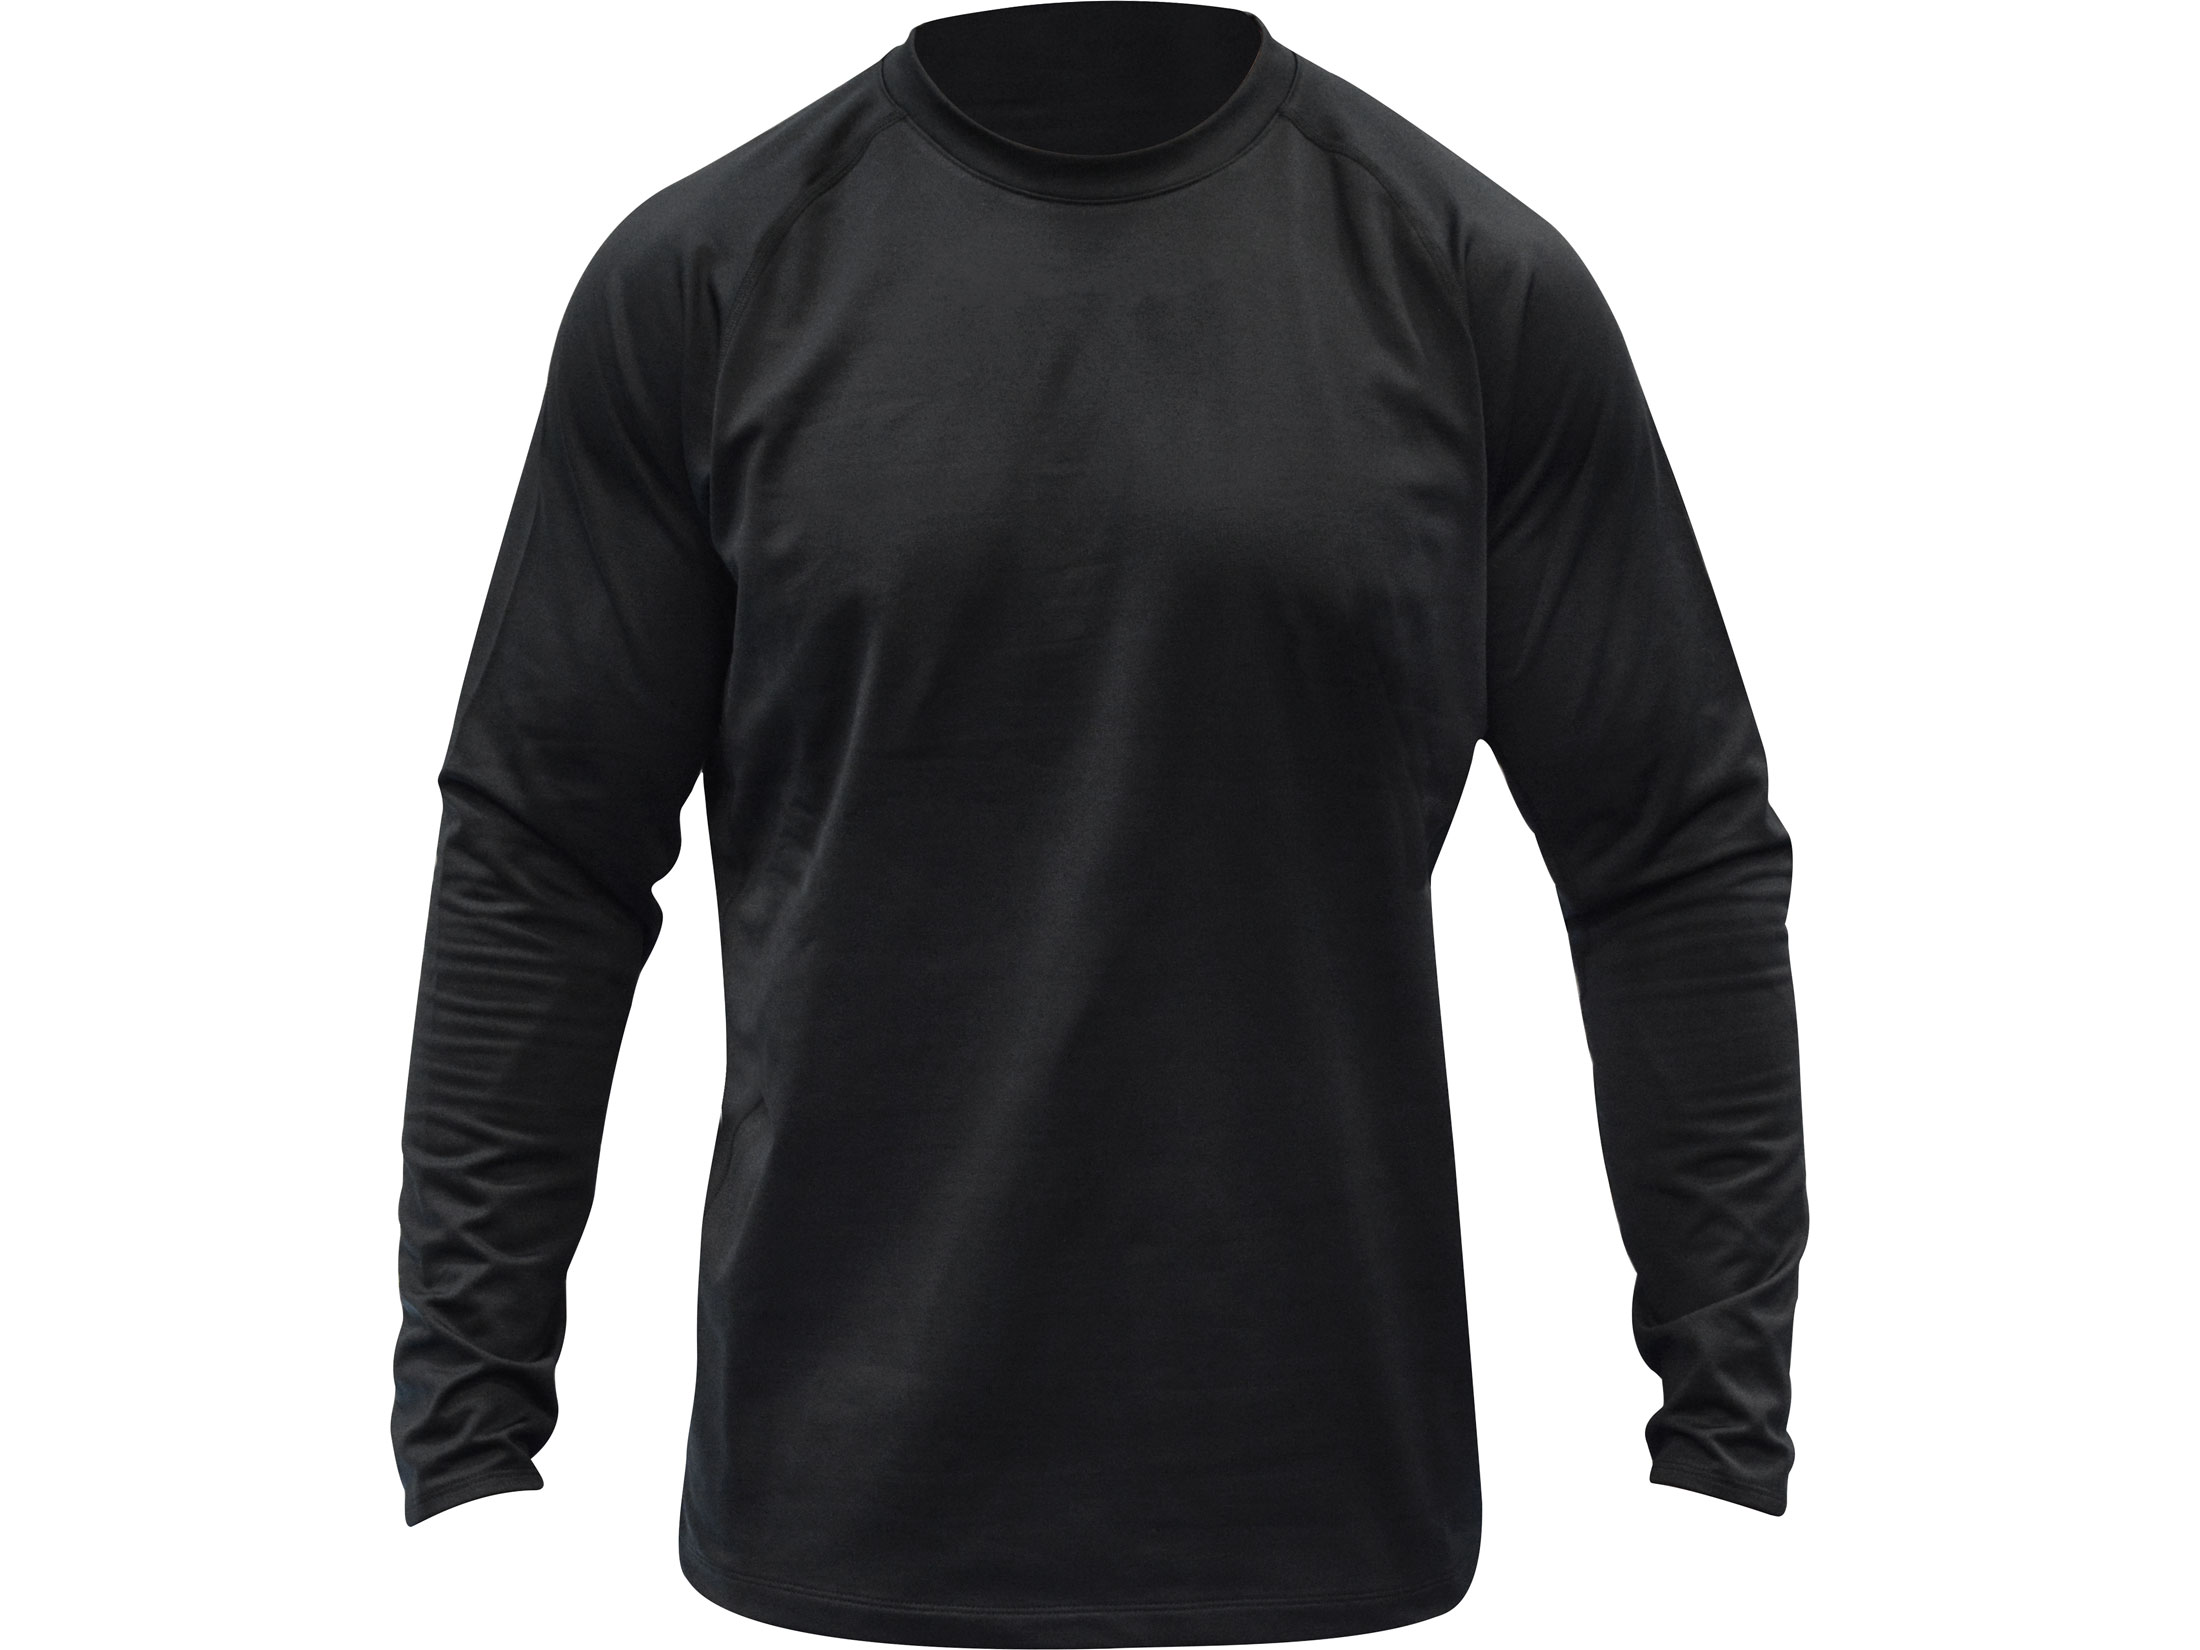 MidwayUSA Men's Level Two Long Sleeve Base Layer Shirt Black 2XL Tall